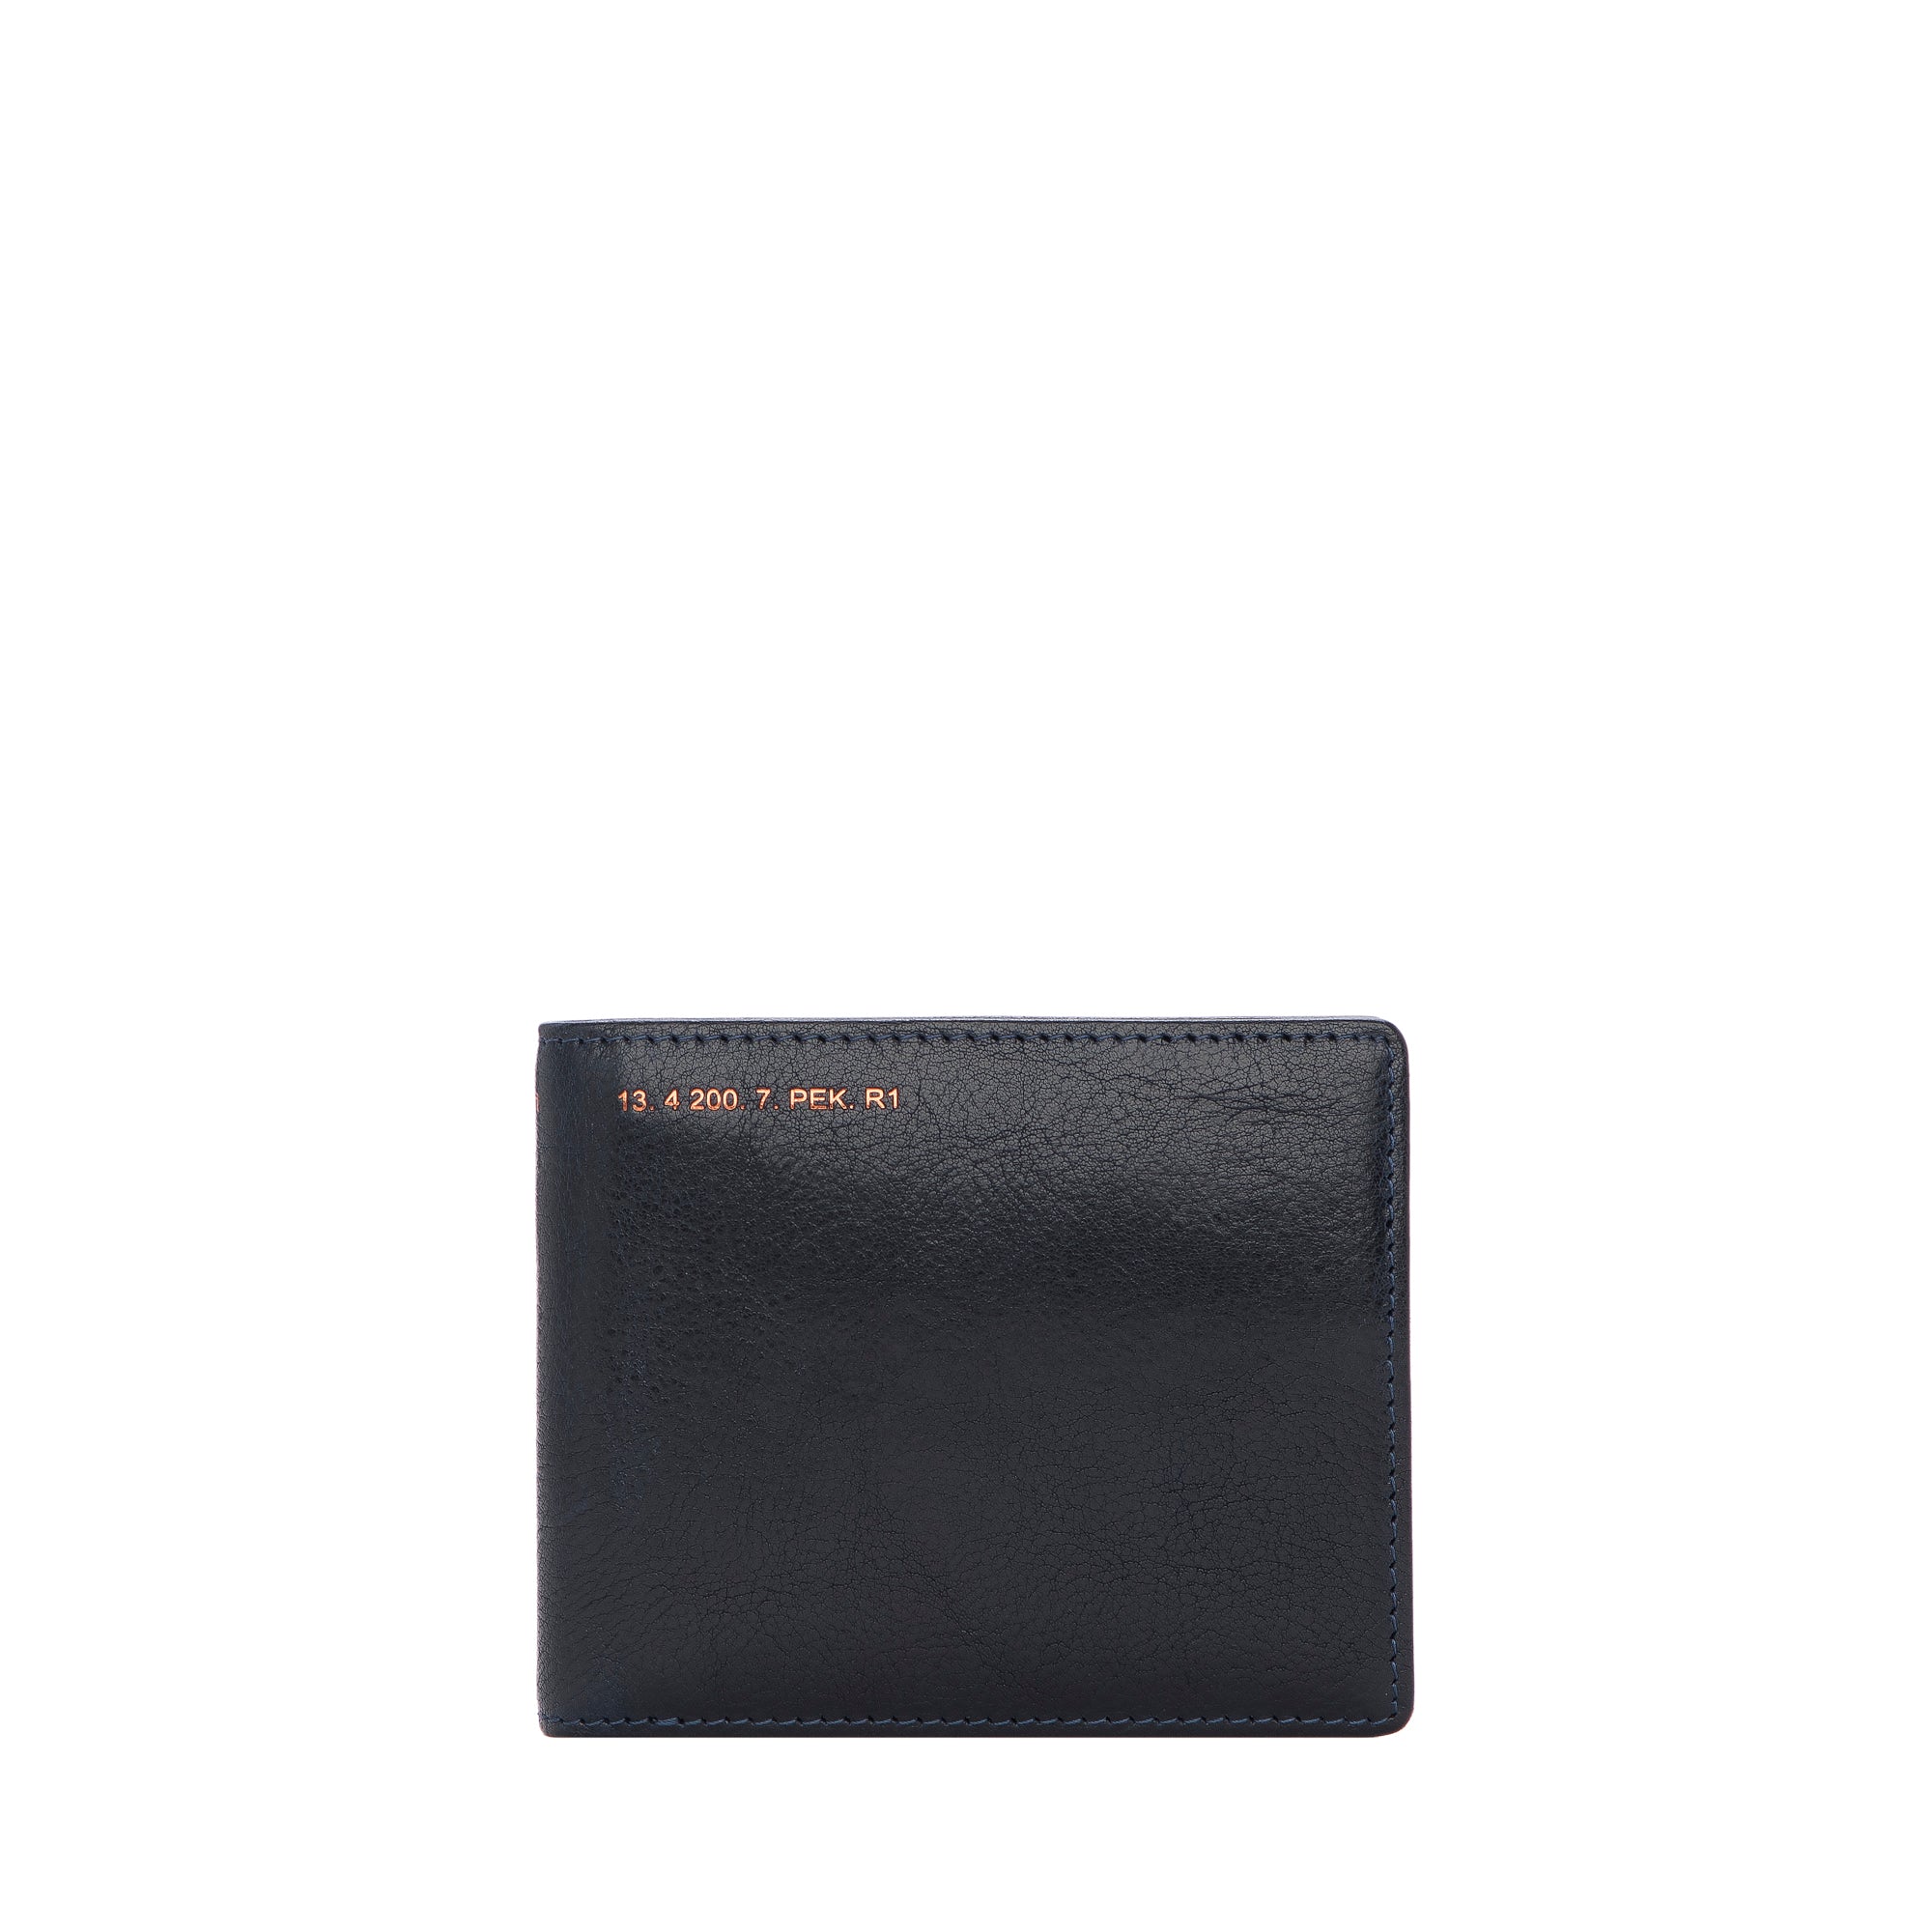 TOUGH JEANSMITH T-21 short wallet #TW121-002